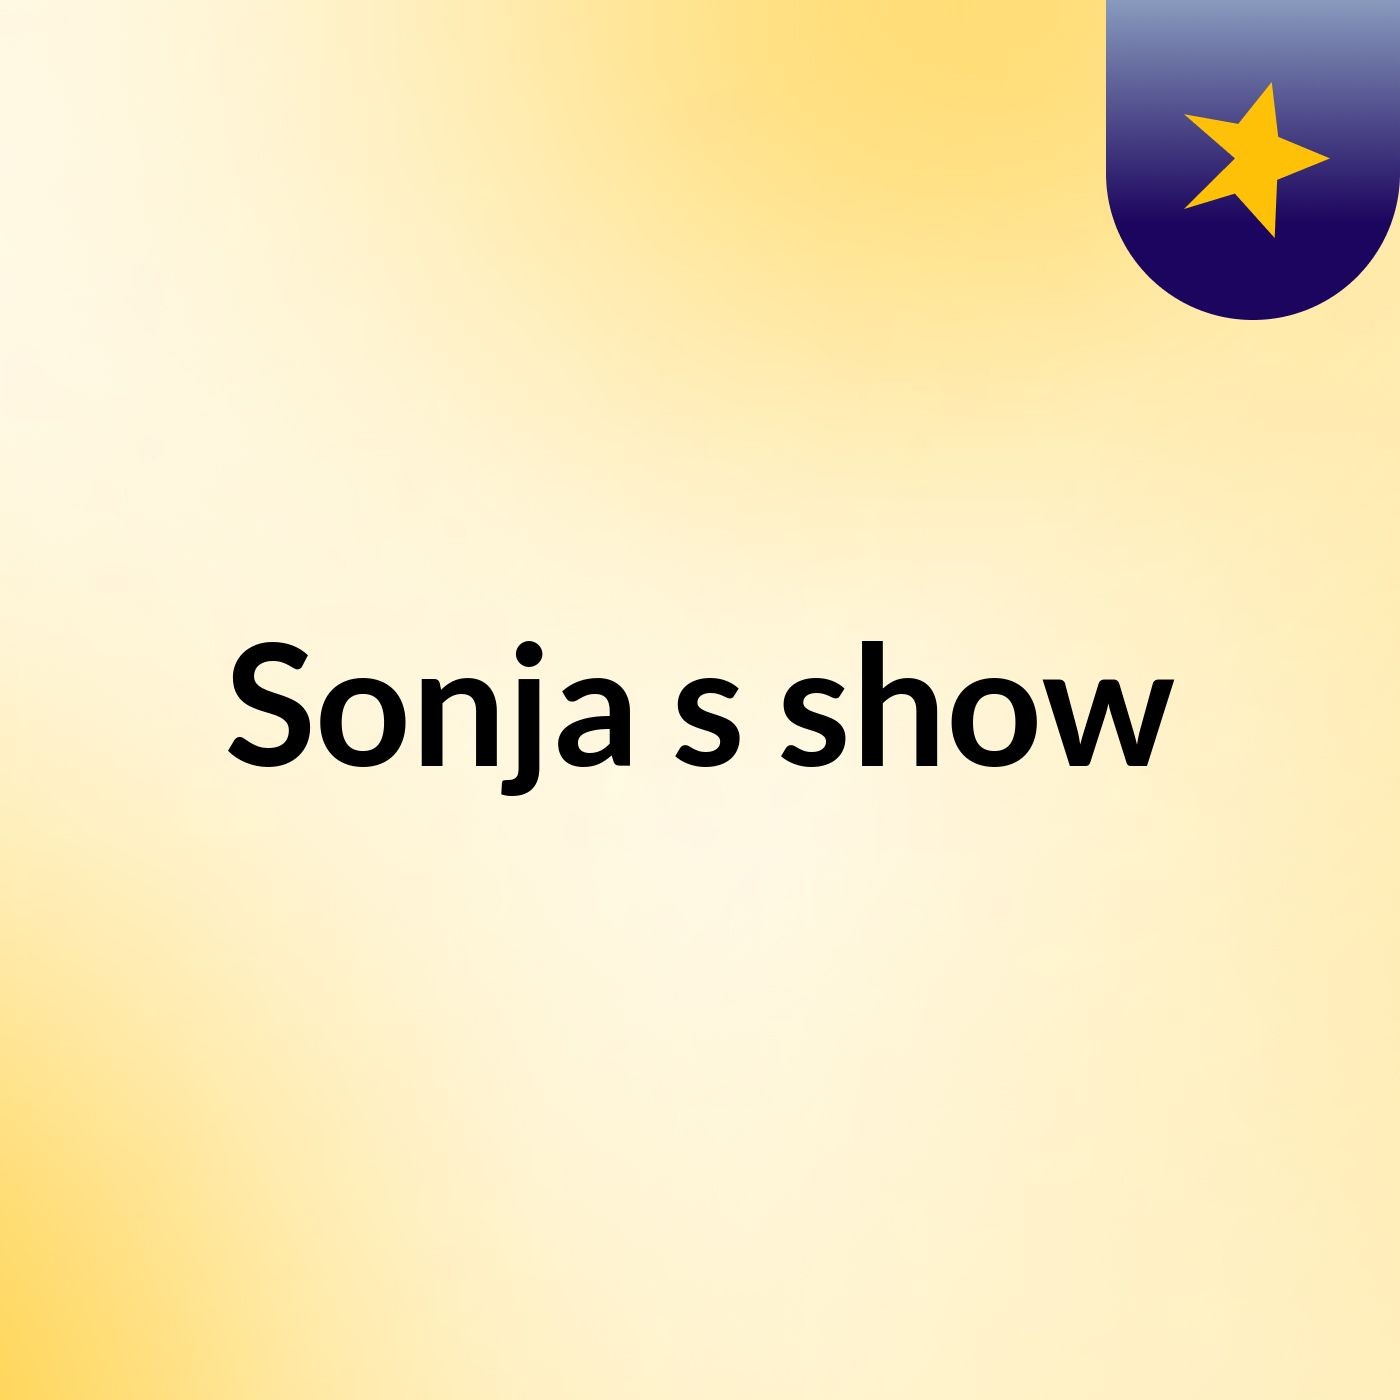 Sonja's show